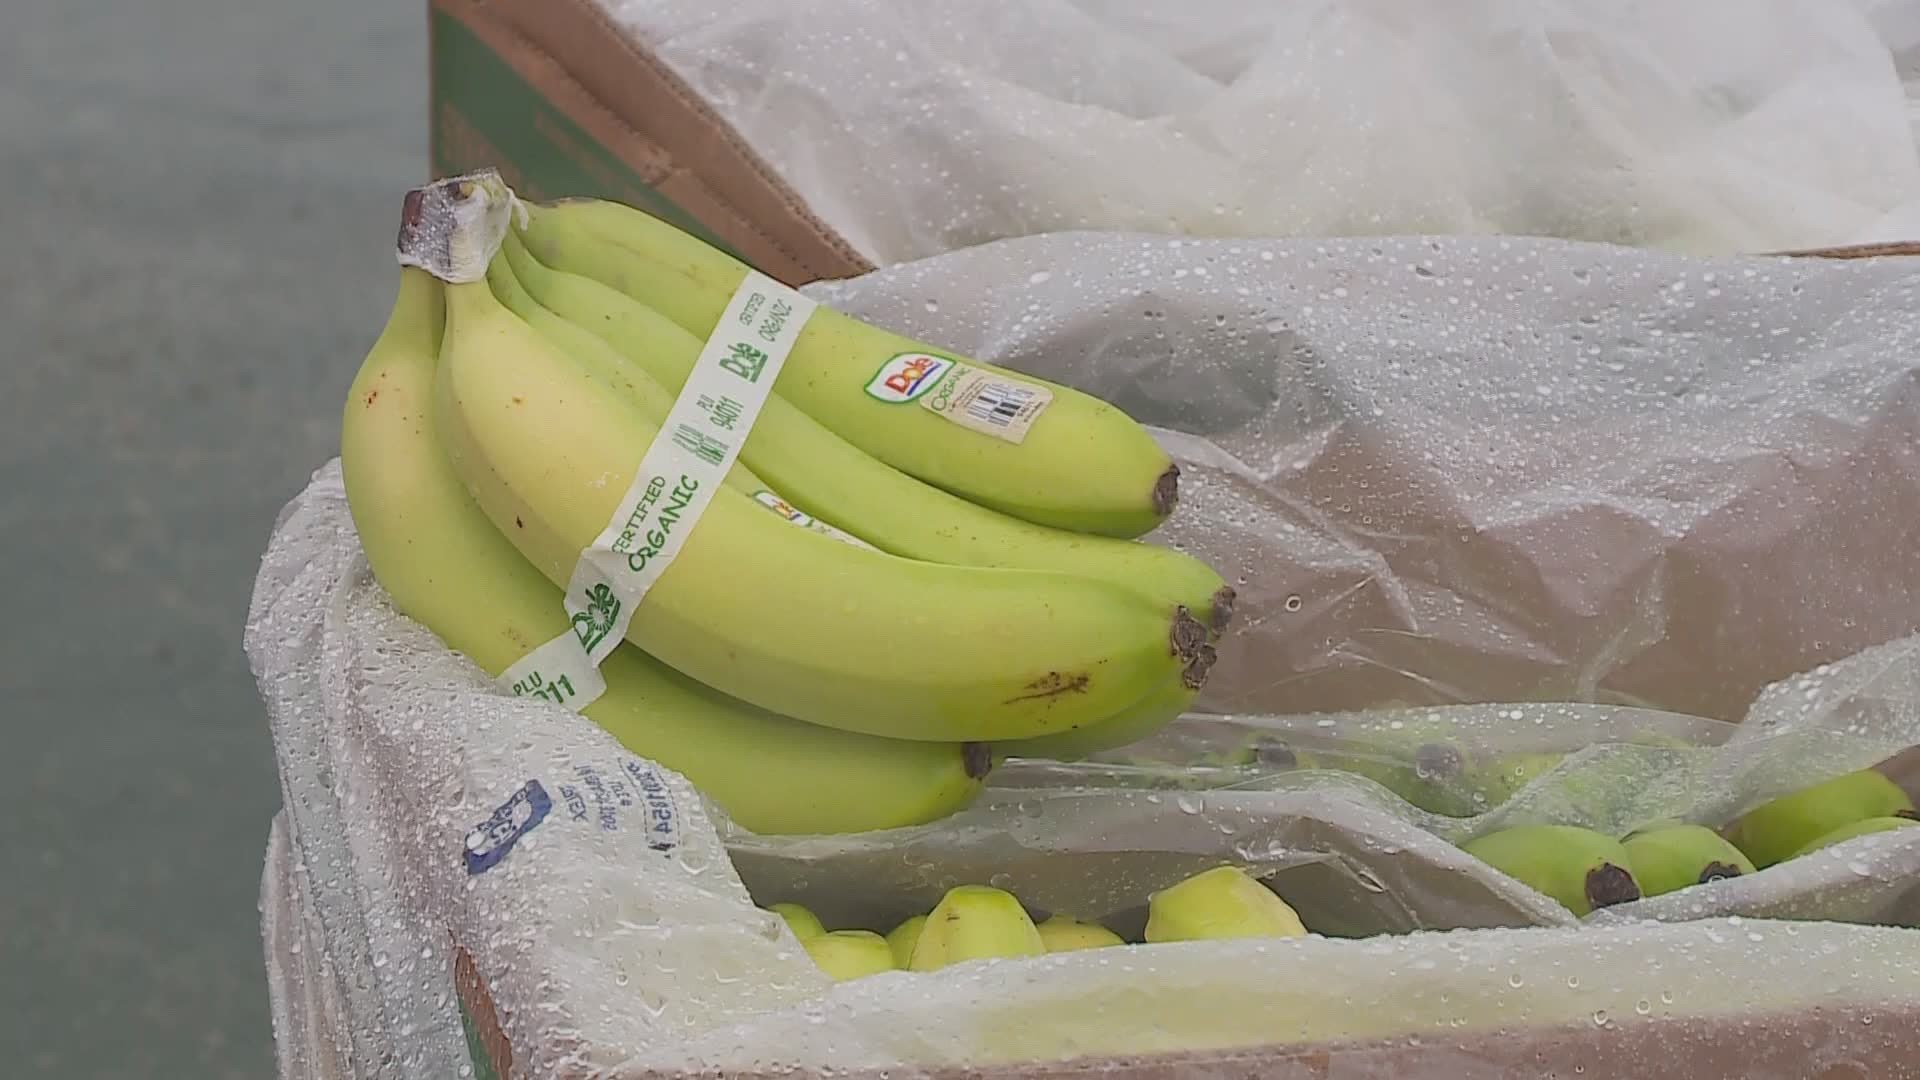 Hy-Vee donates 32,000 bananas to local families